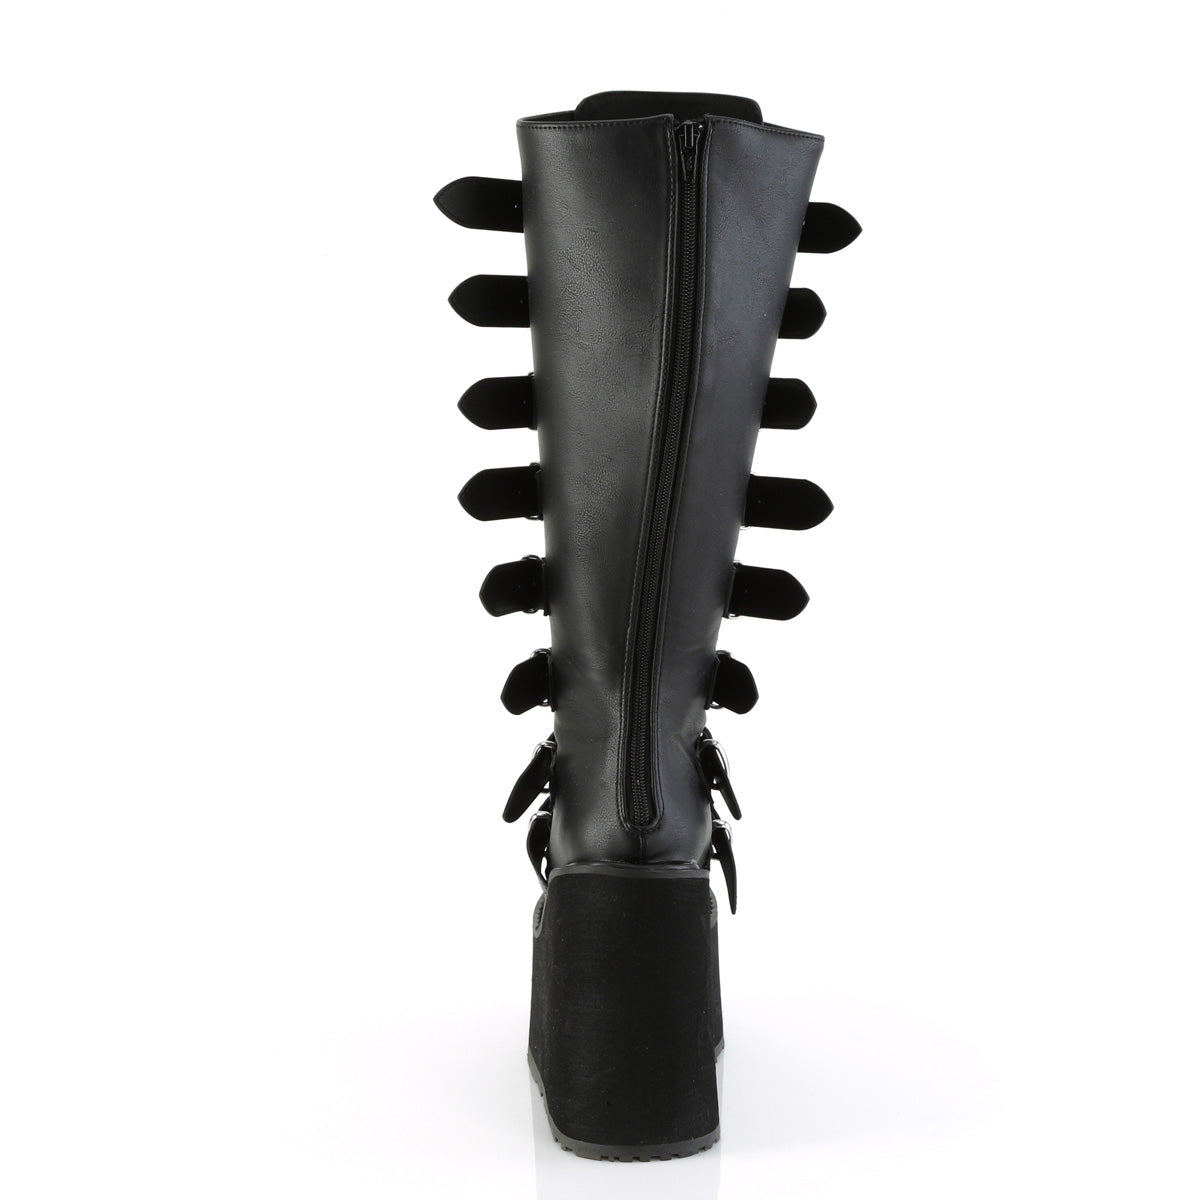 SWING-815WC Demonia Black Vegan Leather Women's Mid-Calf & Knee High Boots [Demonia Cult Alternative Footwear]